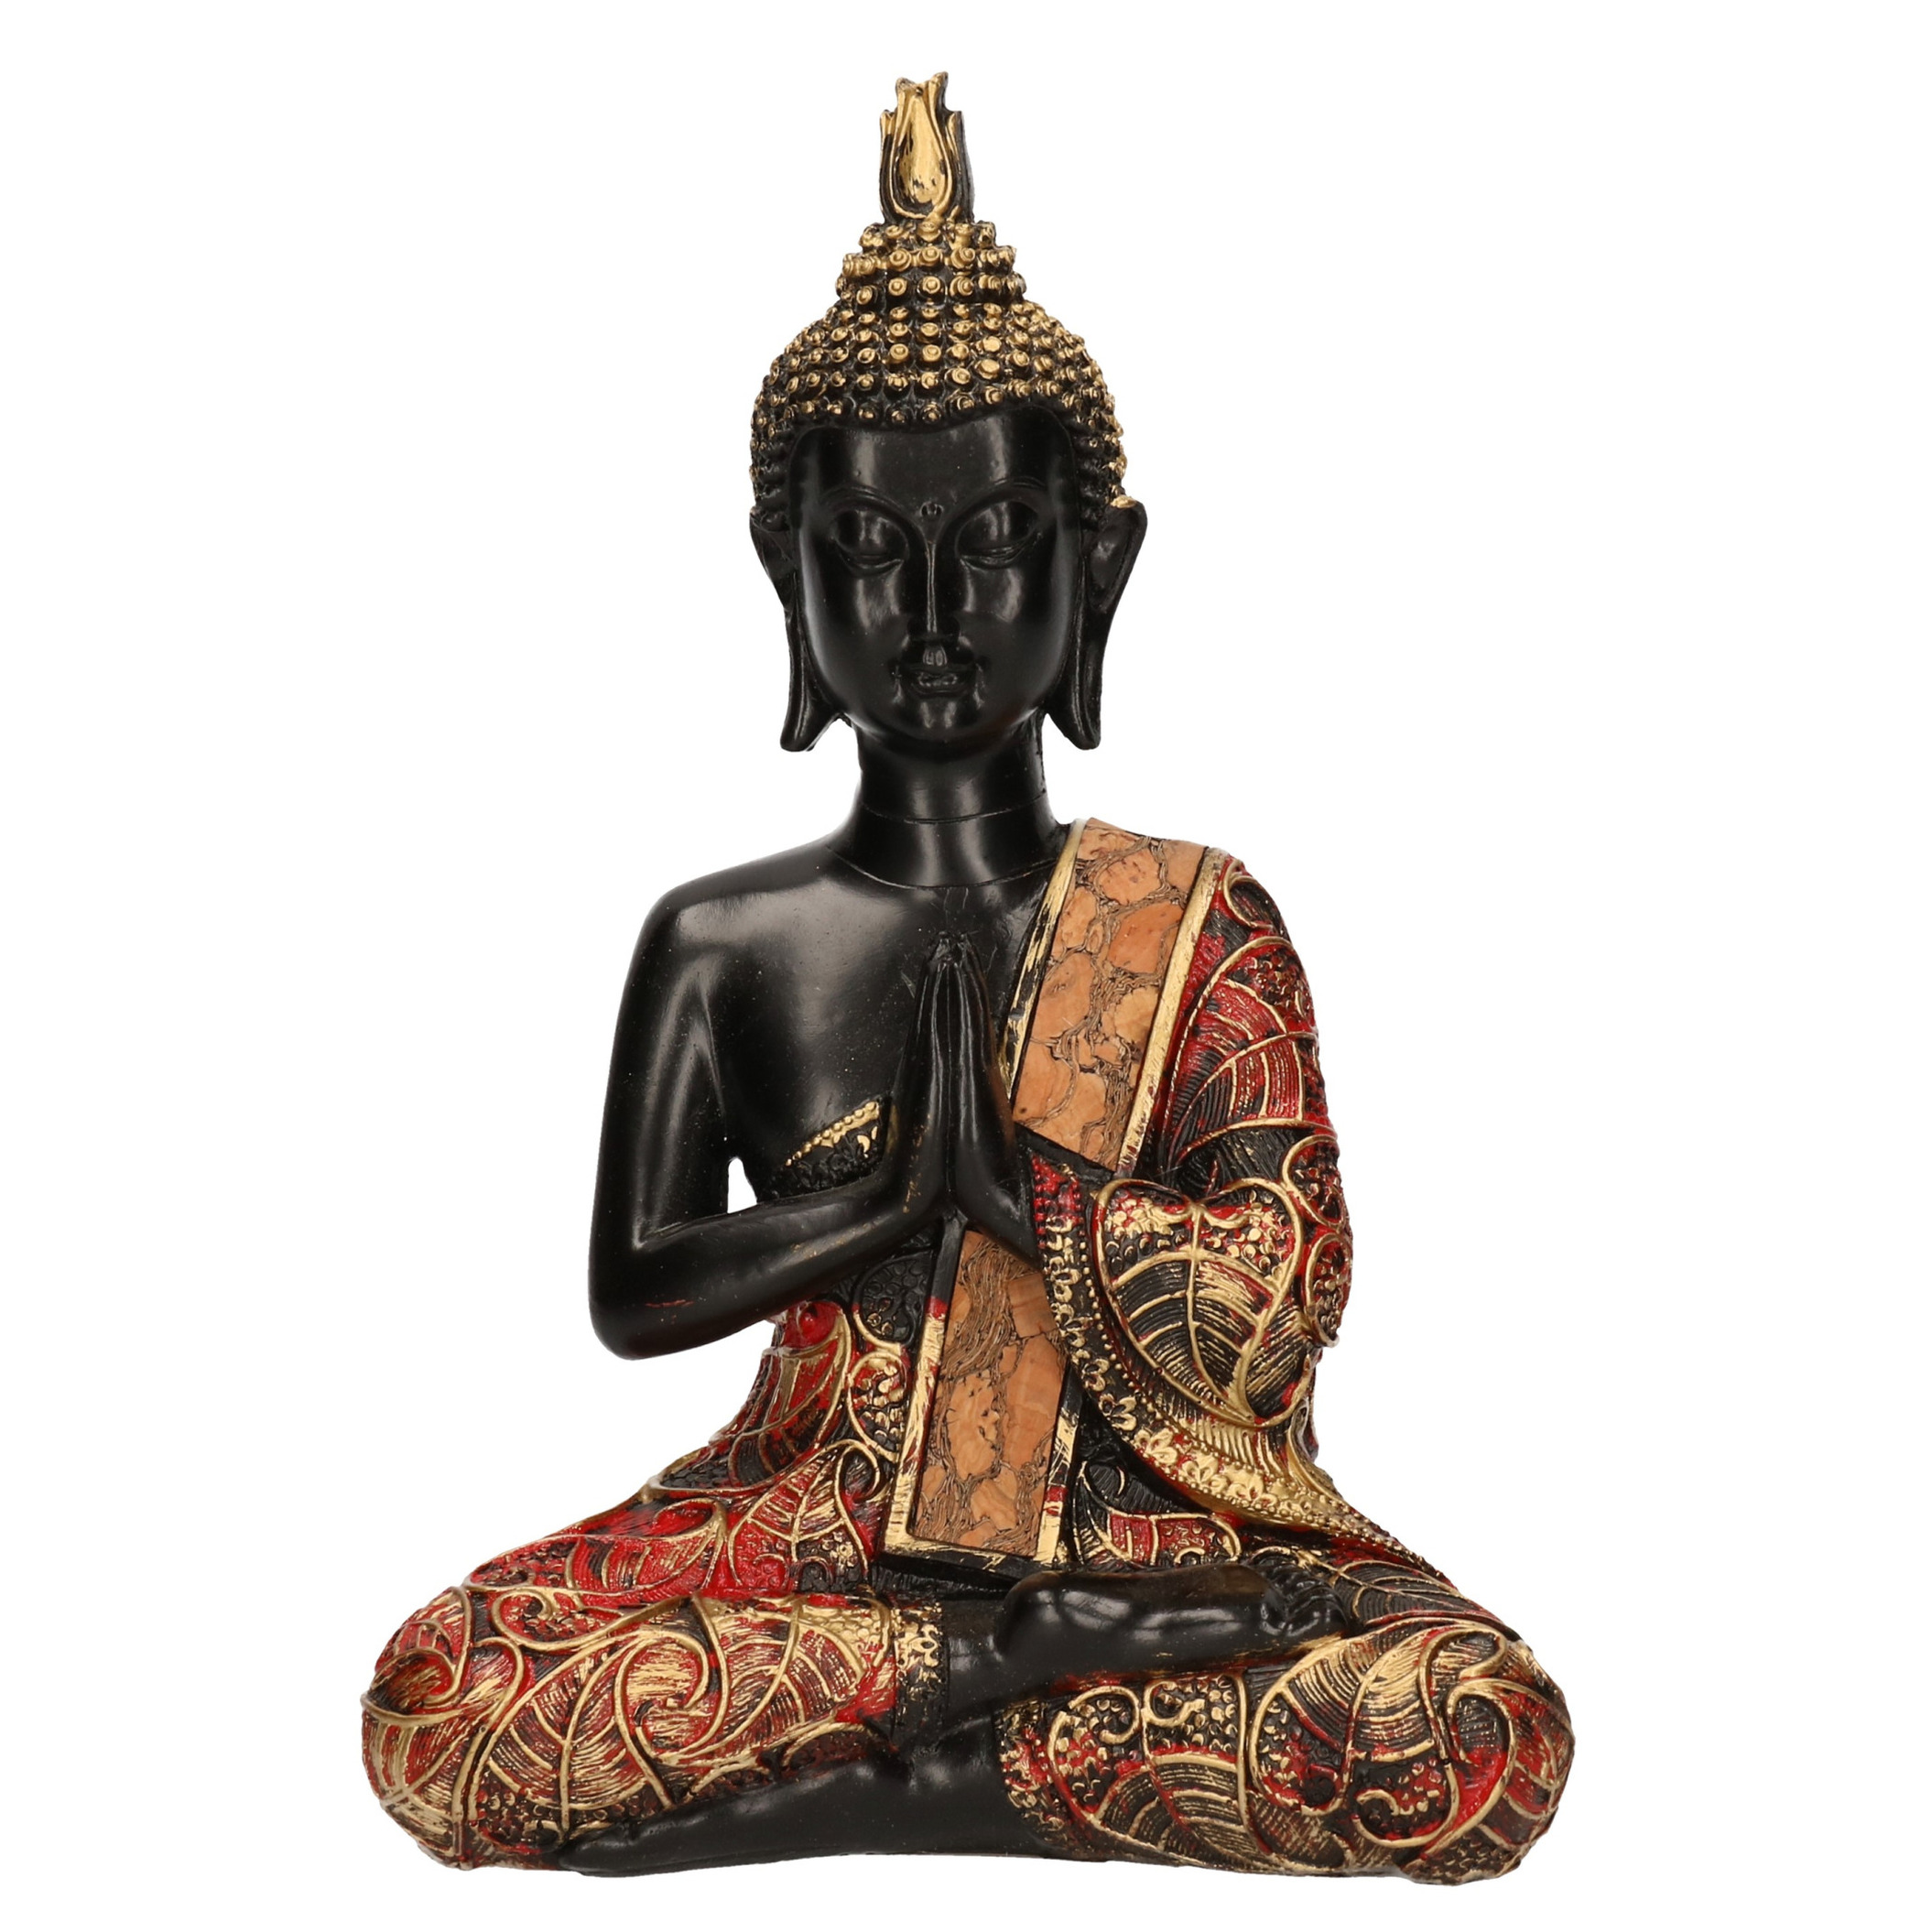 Boeddha beeld zwart/groud/rood zittend 21 cm type 1